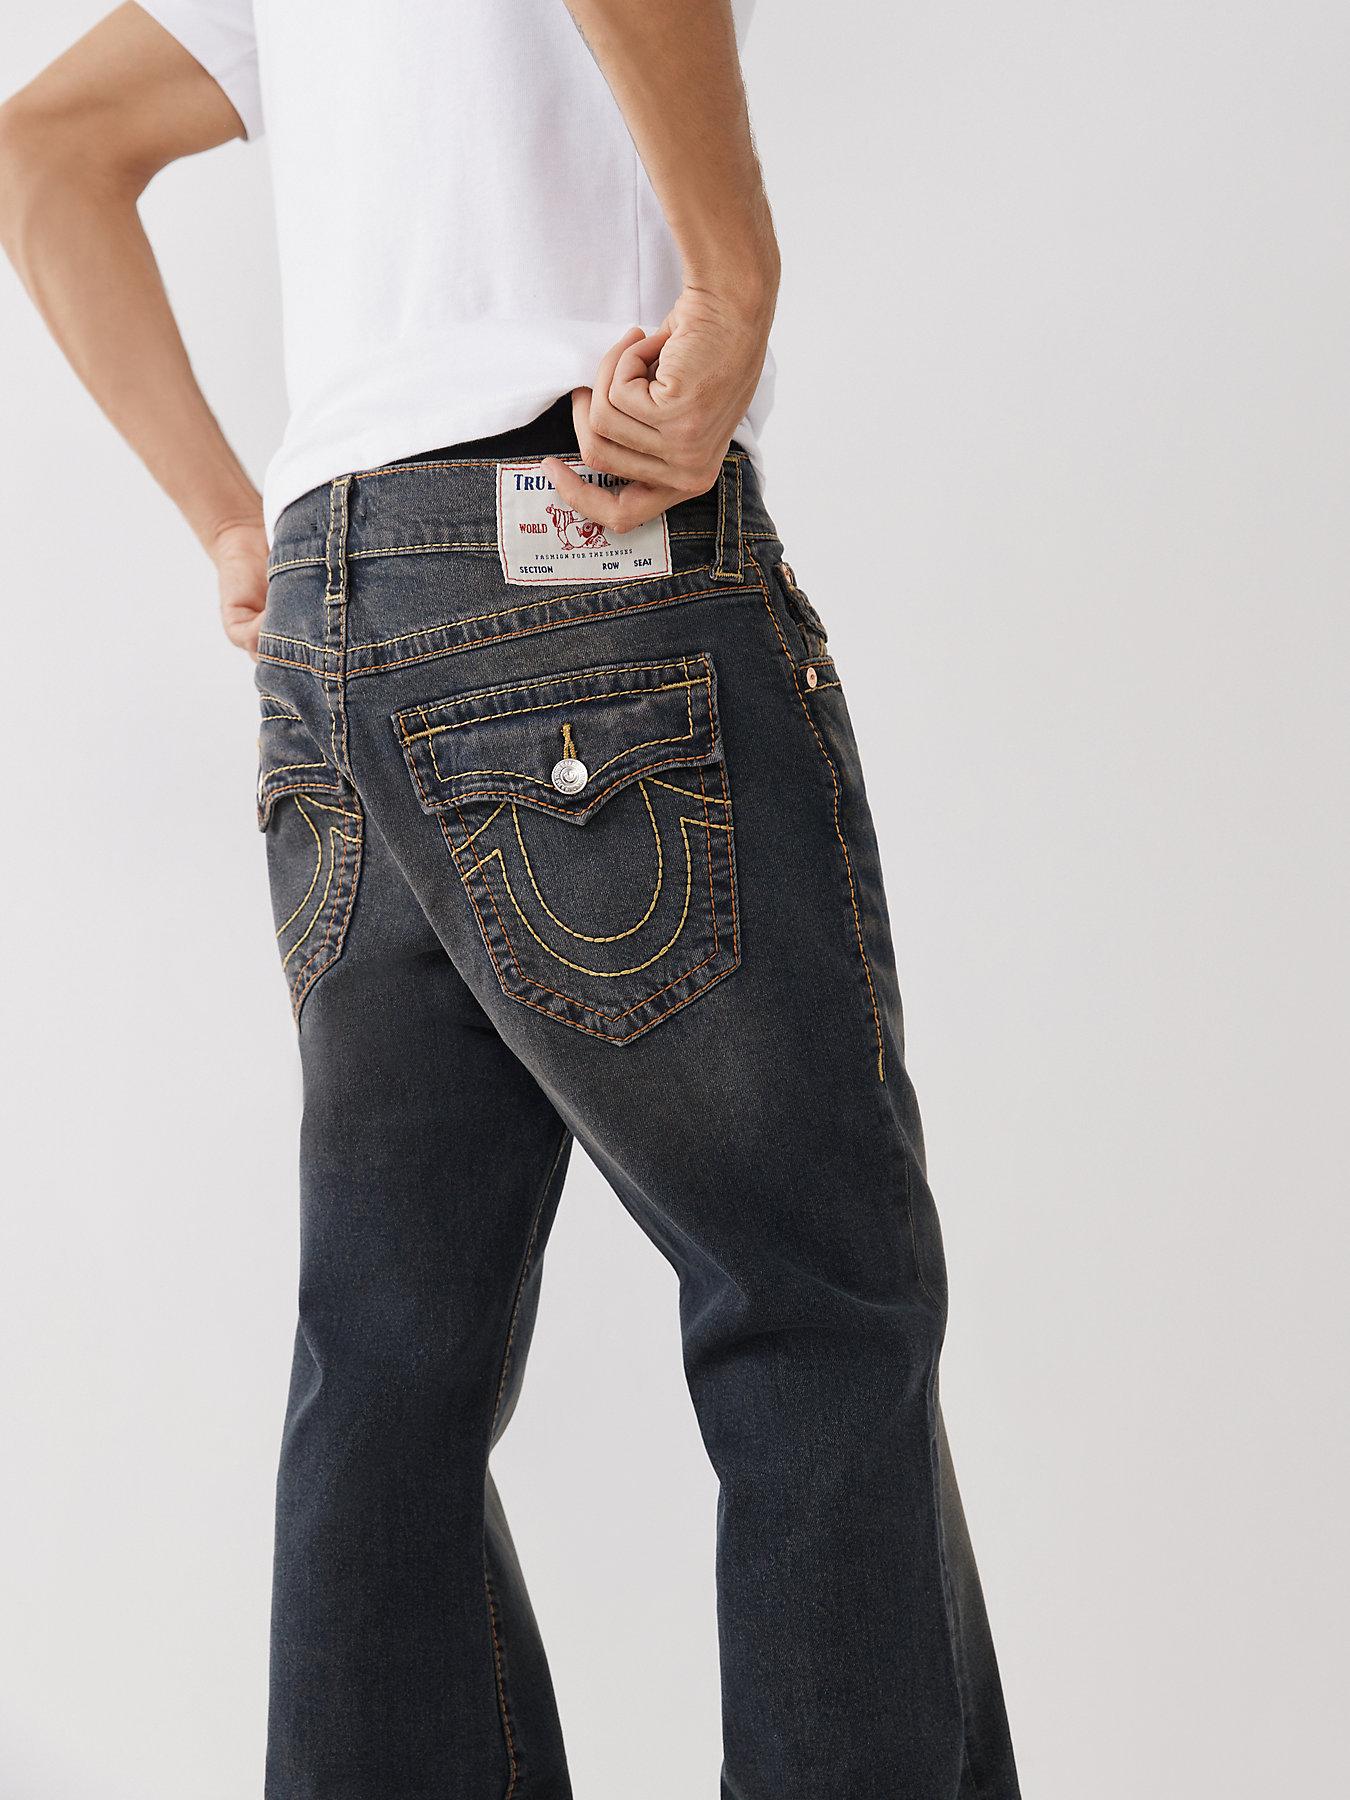 invade Basement never true religion bootcut jeans mens usa Peeling Ripe ...